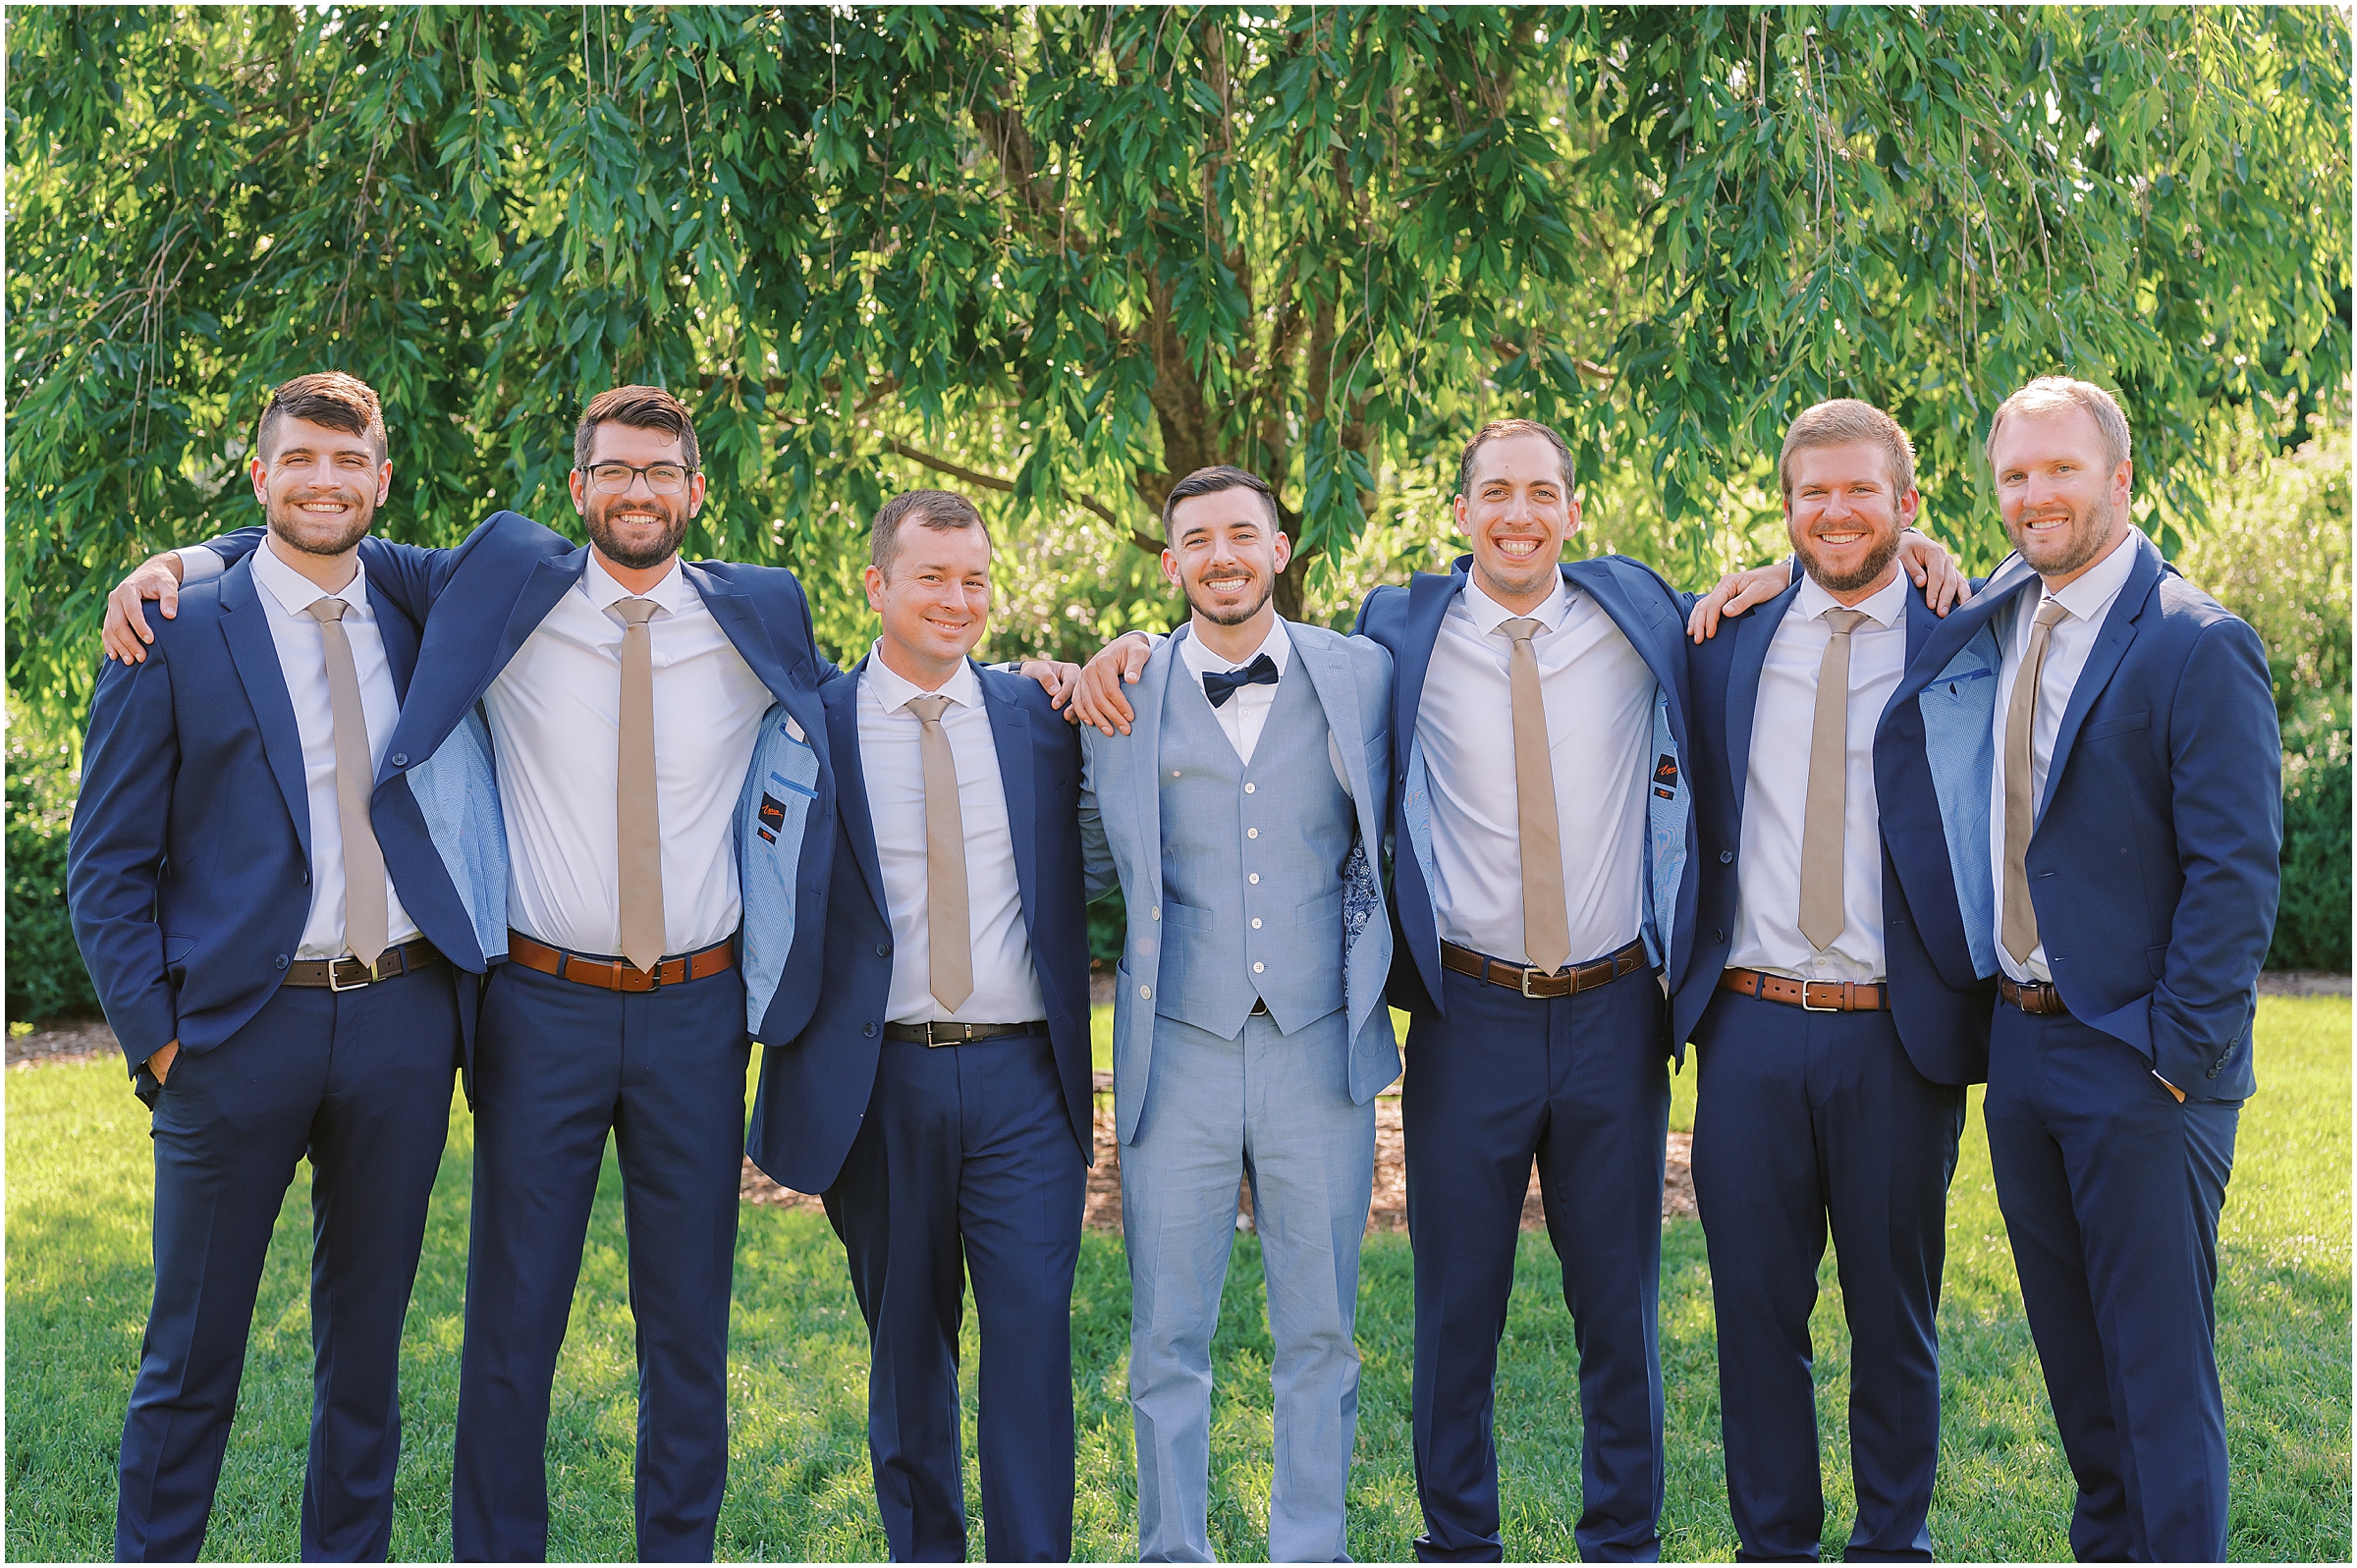 Groom and groomsmen in navy suits with gold ties